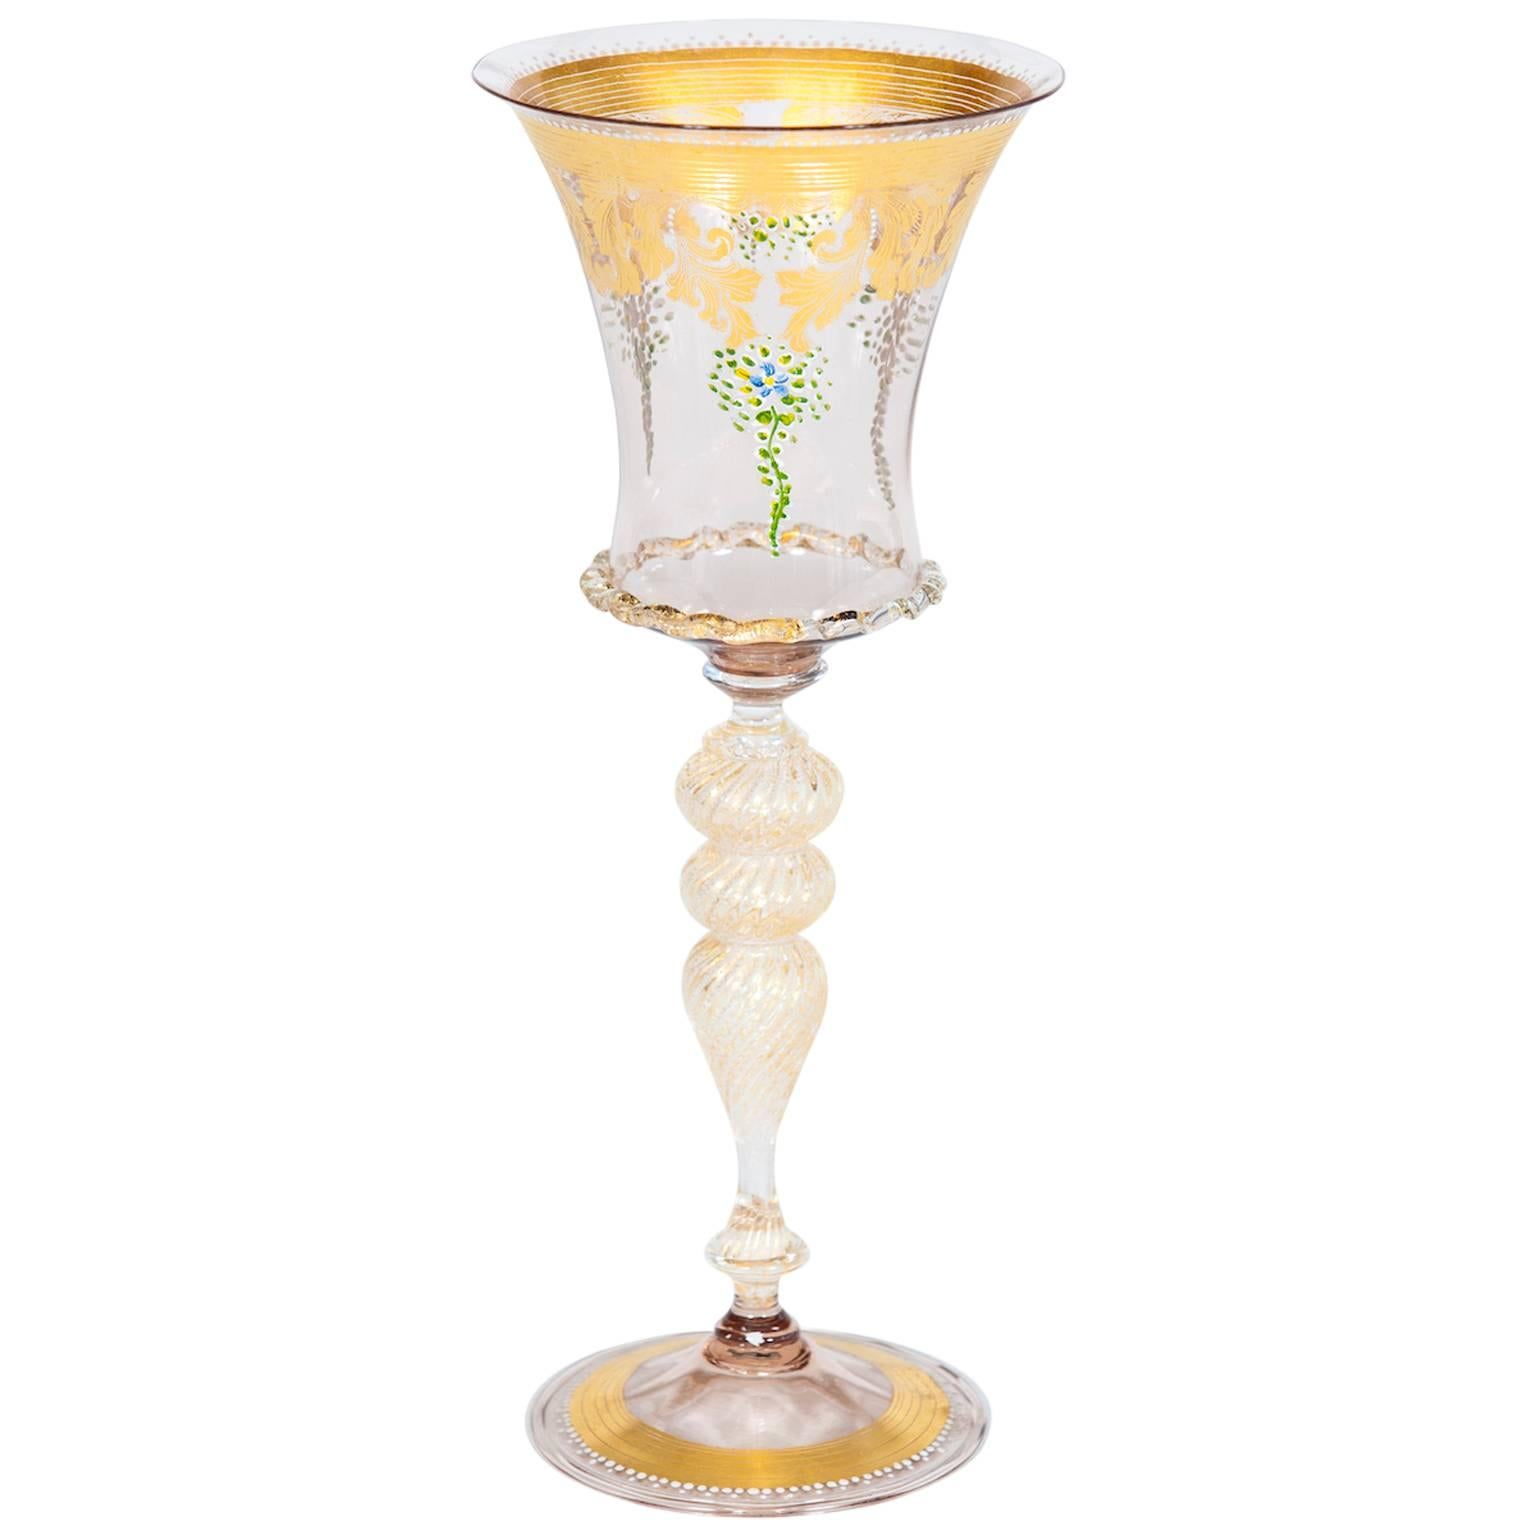 Handcrafted gold glass goblet from 1970s Murano dekoriert mit exquisitem Blattgold